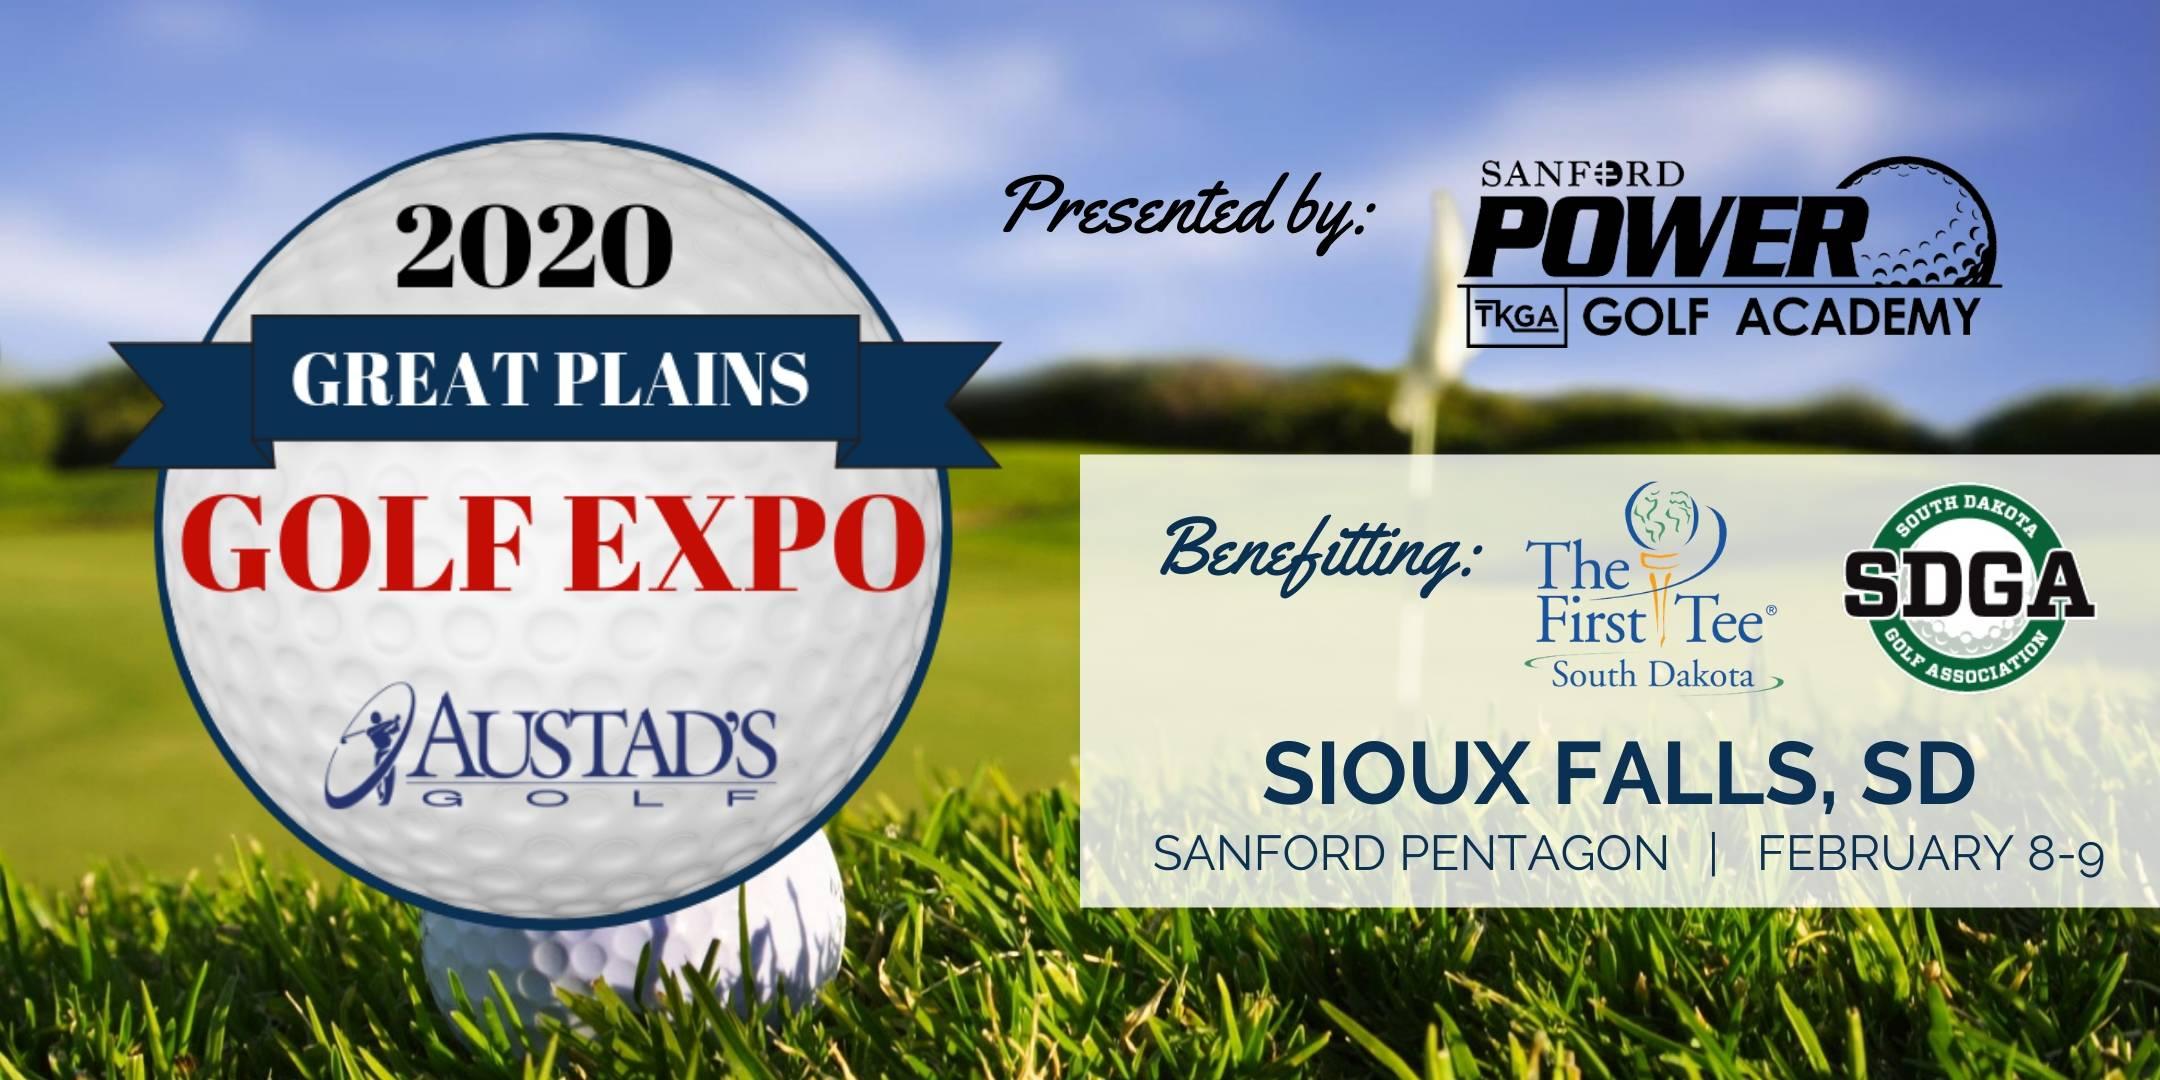 Austad's 2020 Golf Expo Presented by Sanford Power Golf Academy - Sioux Falls